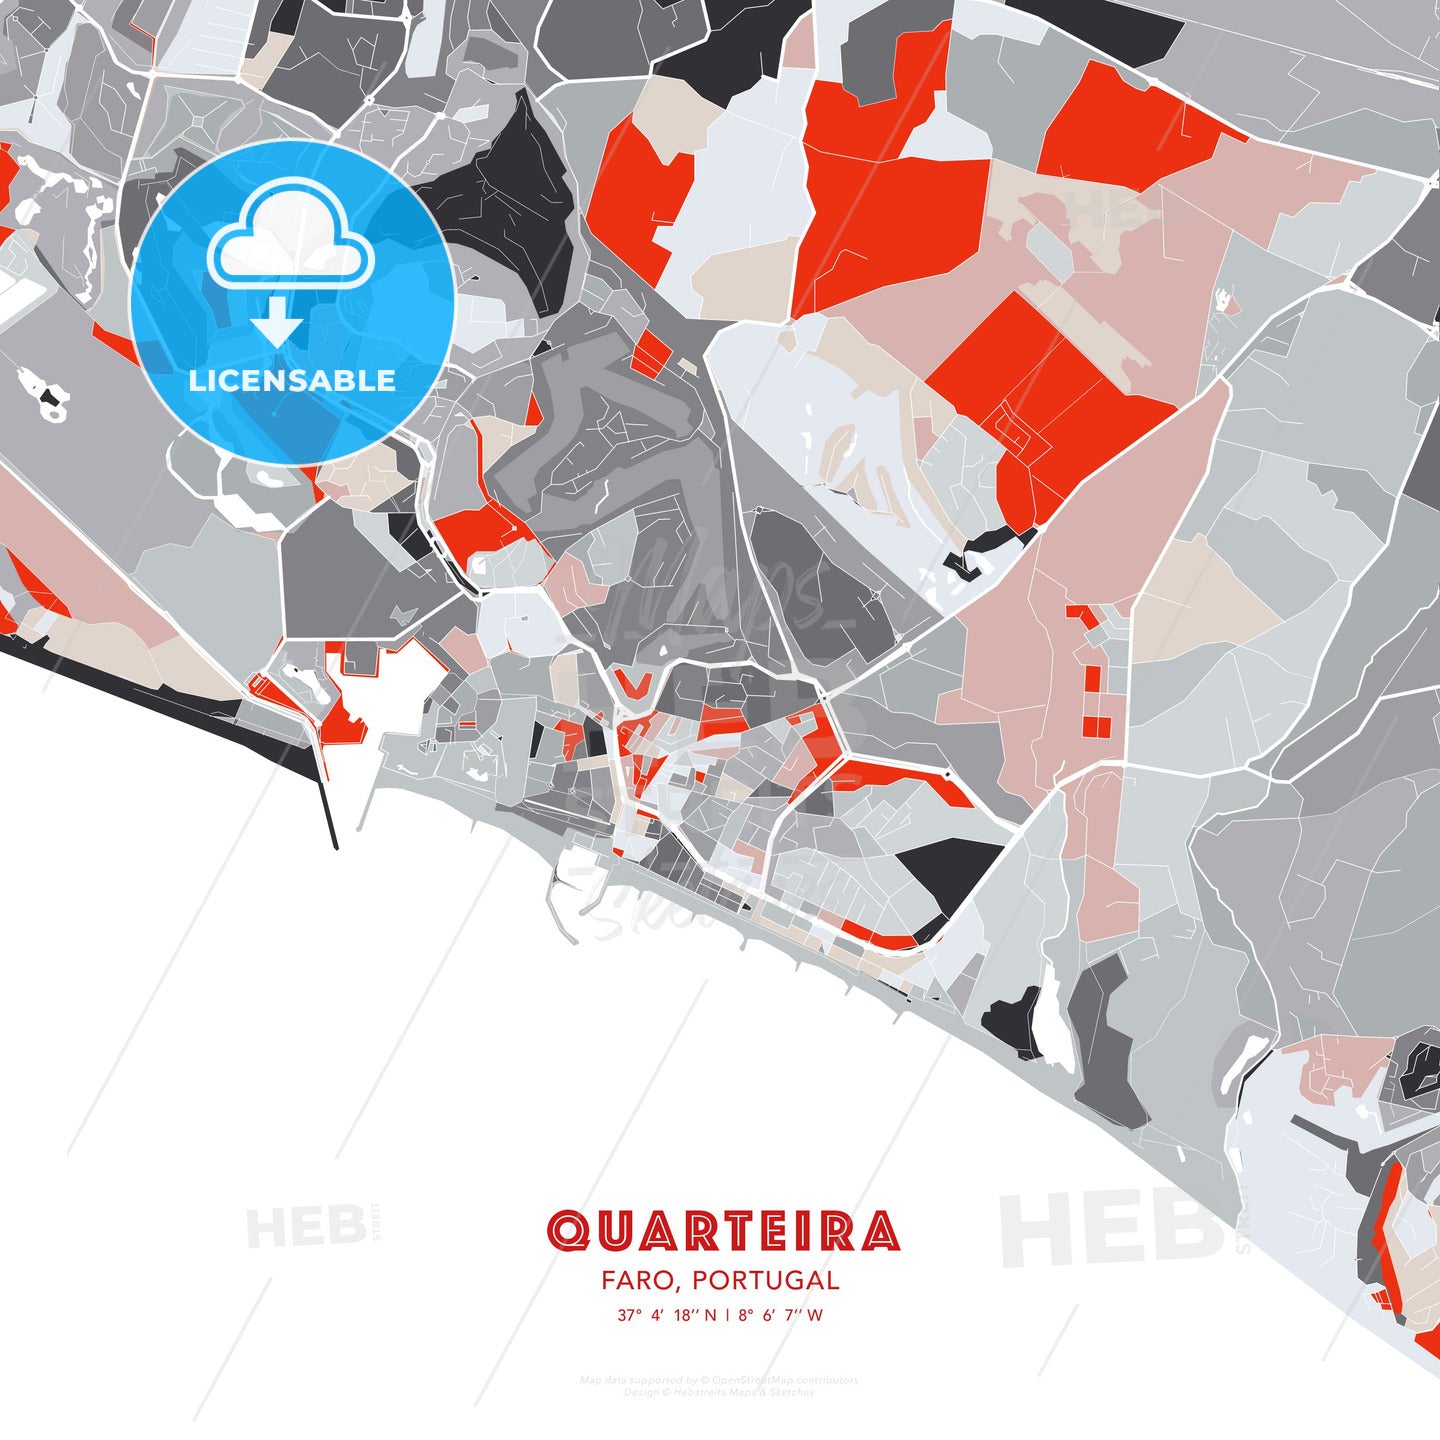 Quarteira, Faro, Portugal, modern map - HEBSTREITS Sketches